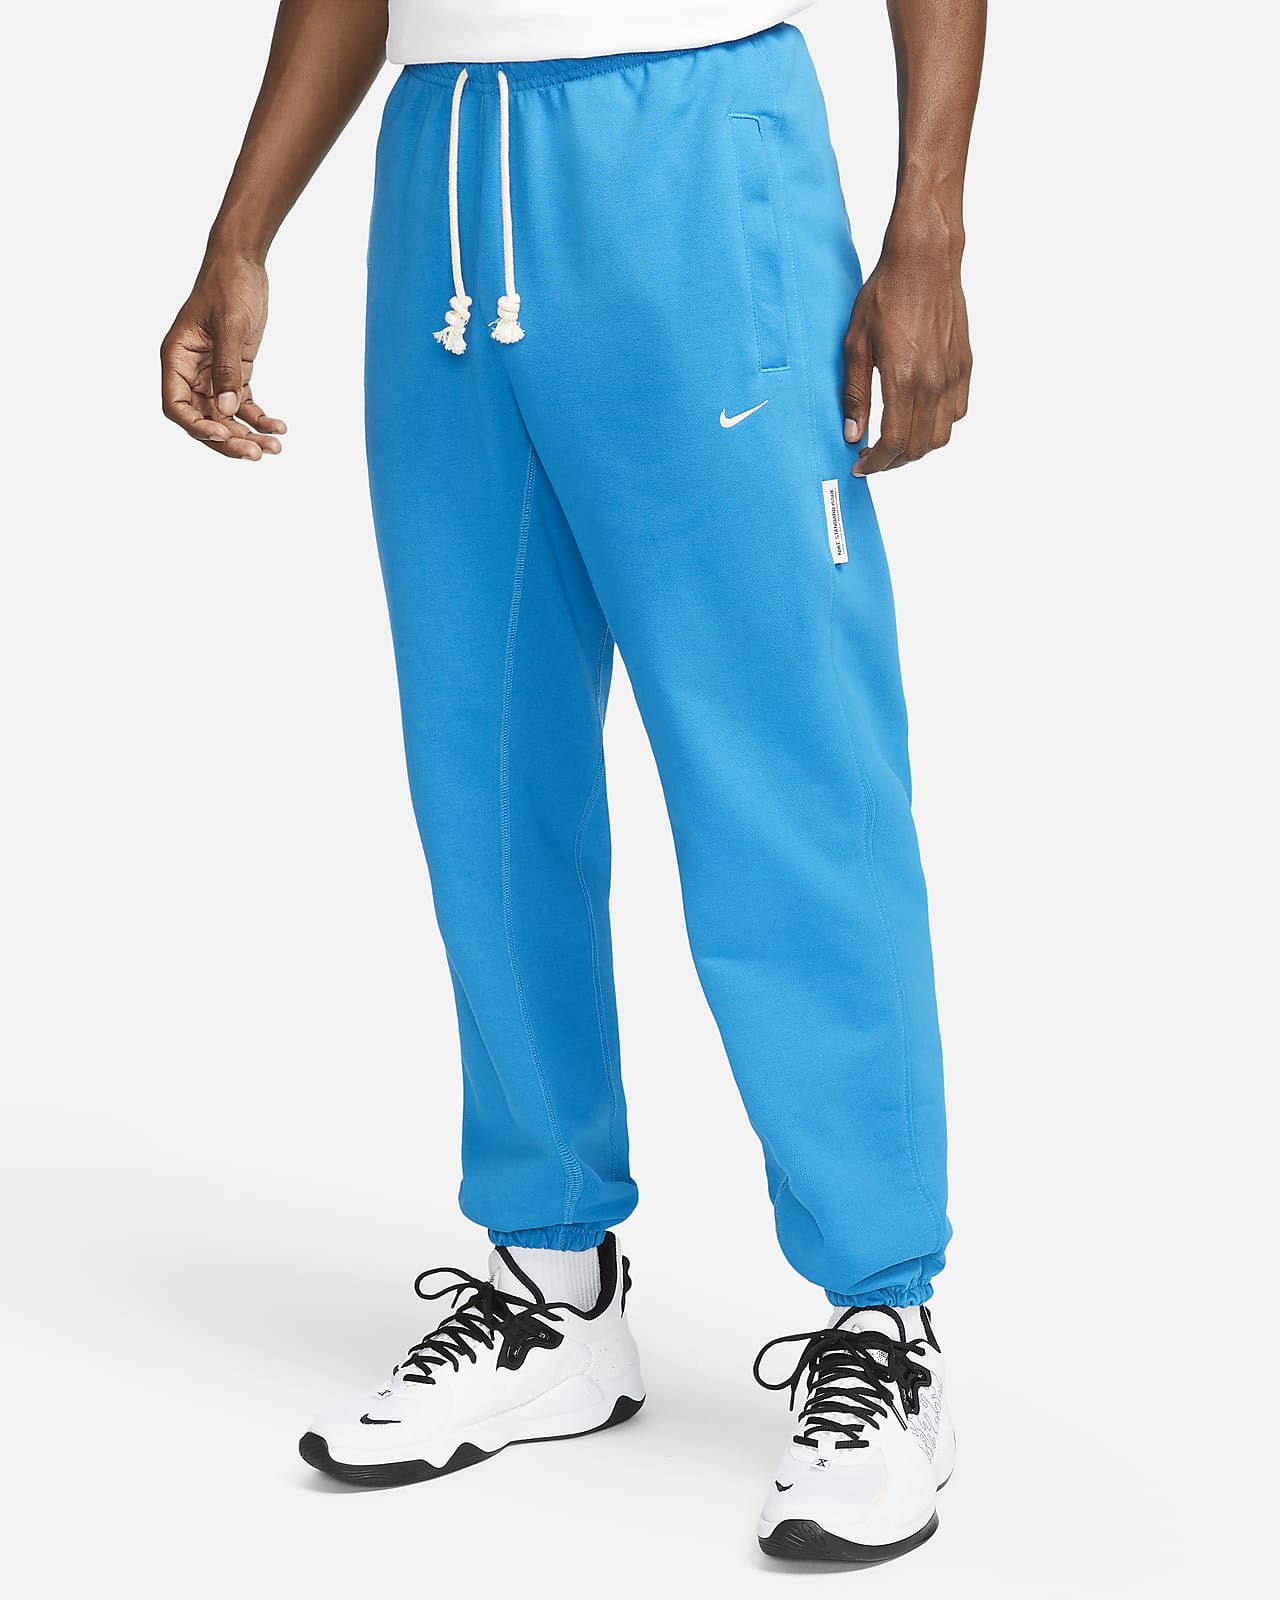 Nike Standard Issue Men's Dri-FIT Basketball Pants